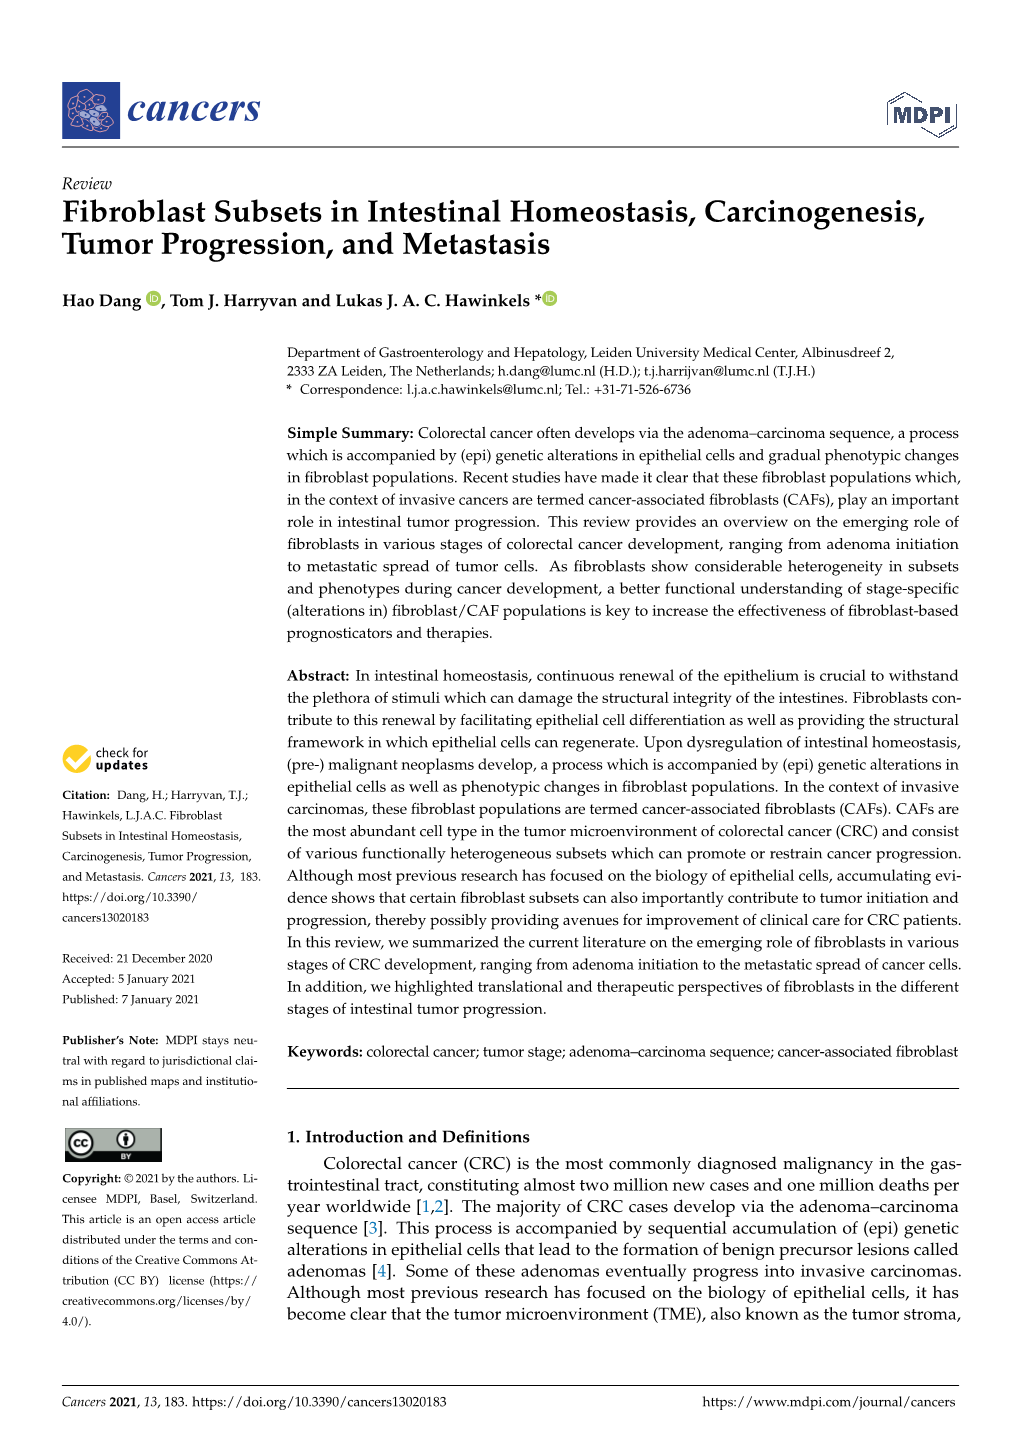 Fibroblast Subsets in Intestinal Homeostasis, Carcinogenesis, Tumor Progression, and Metastasis